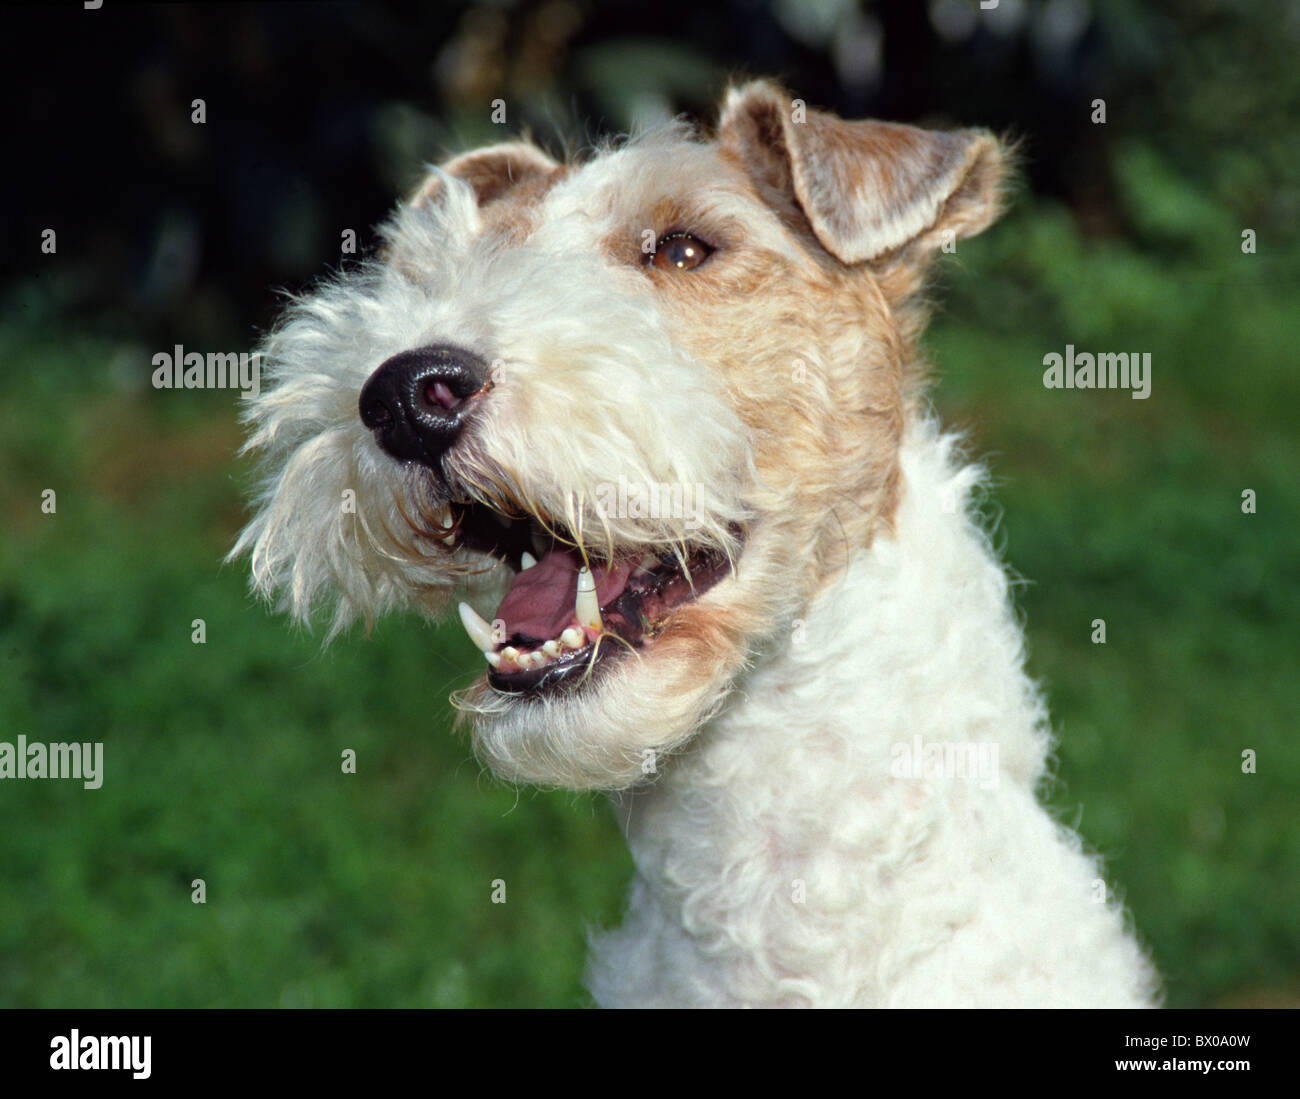 emotion cheeky joy happily cheerfully feeling emotion dog amusing nature portrait fun joke mood animal Stock Photo